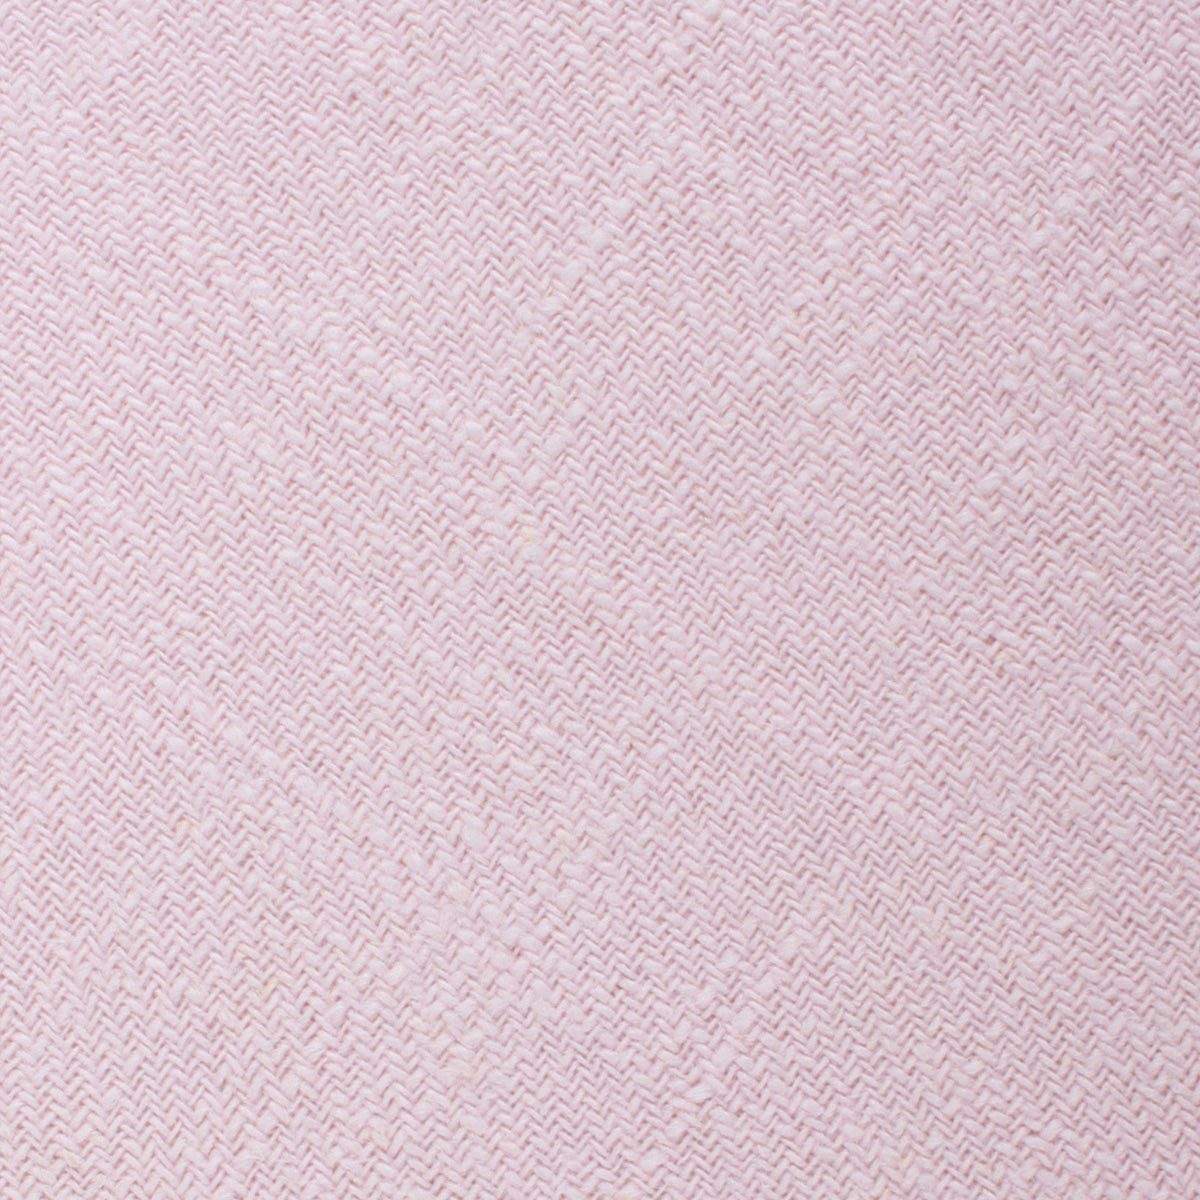 Maldivian Blush Pink Linen Skinny Tie Fabric